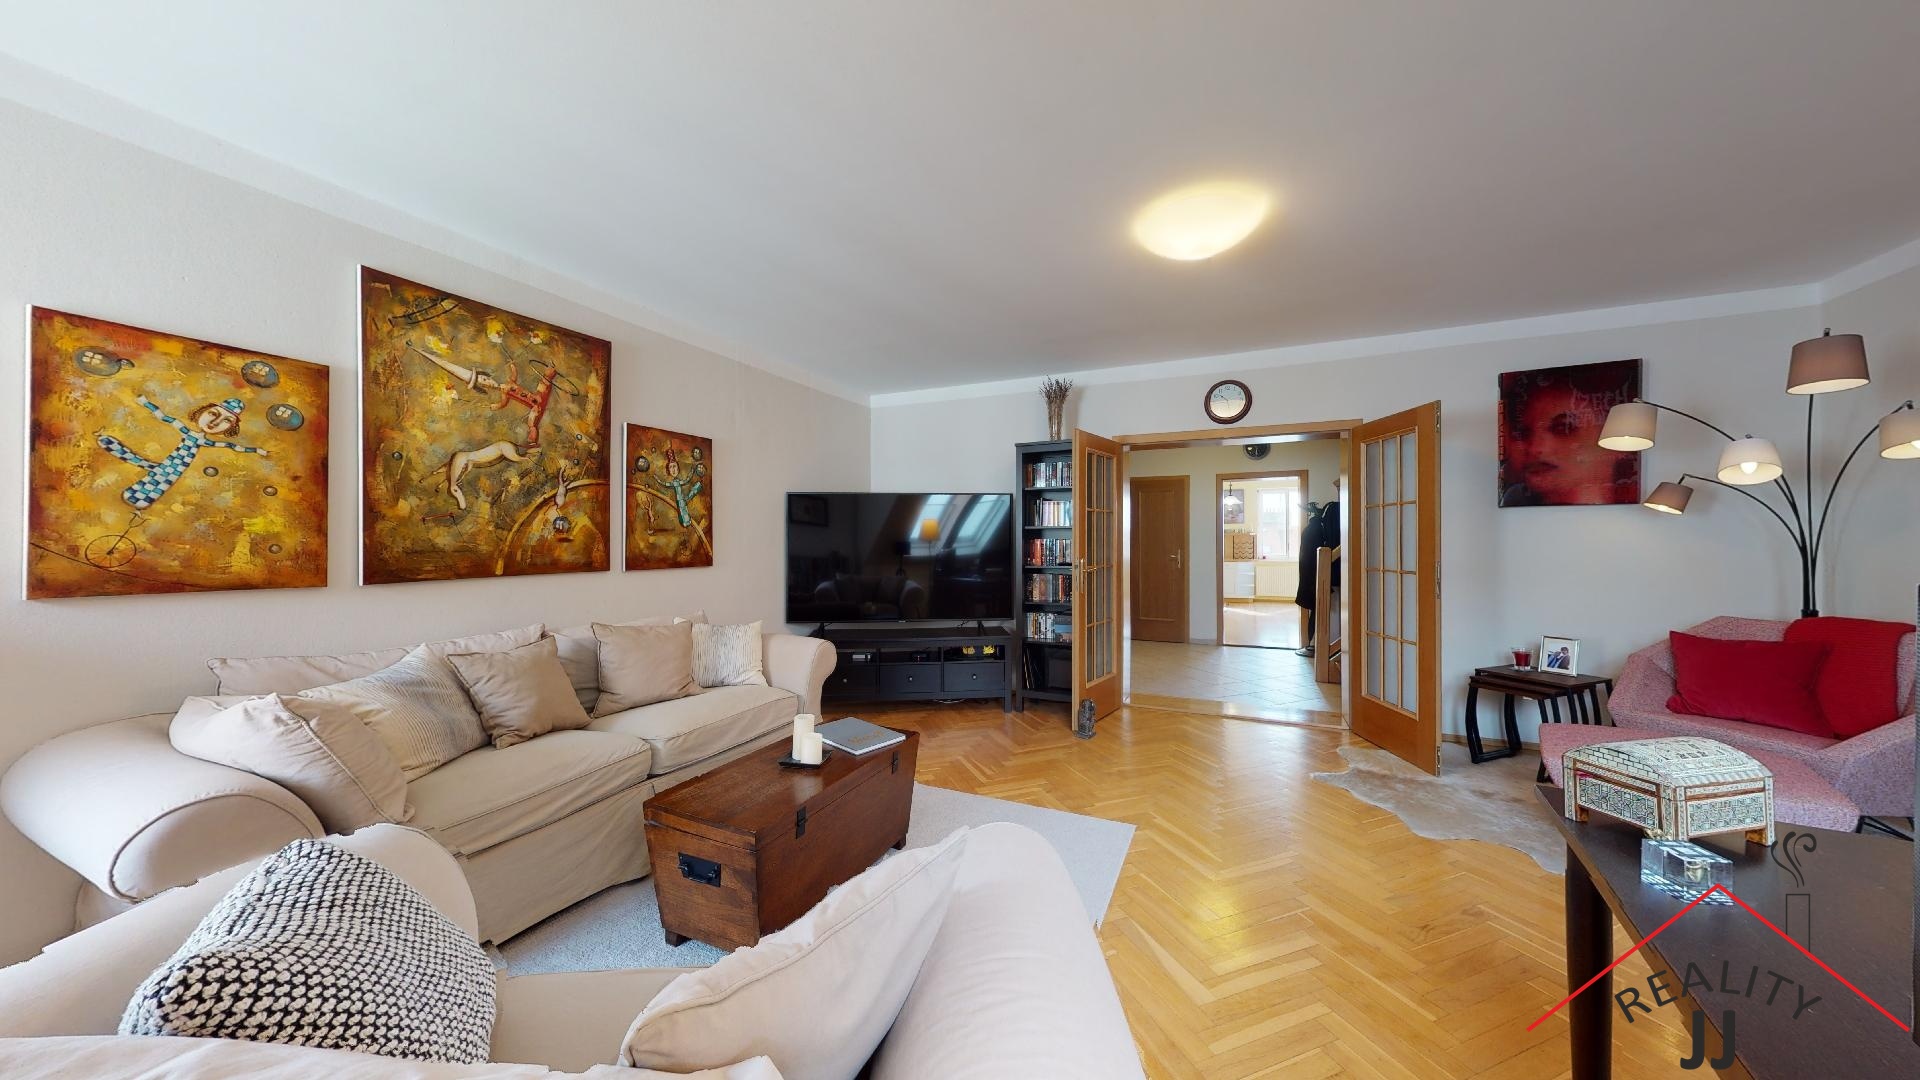 Duplex-apartment-for-sell-Luzicka-street-Praha-2-03192022_113847